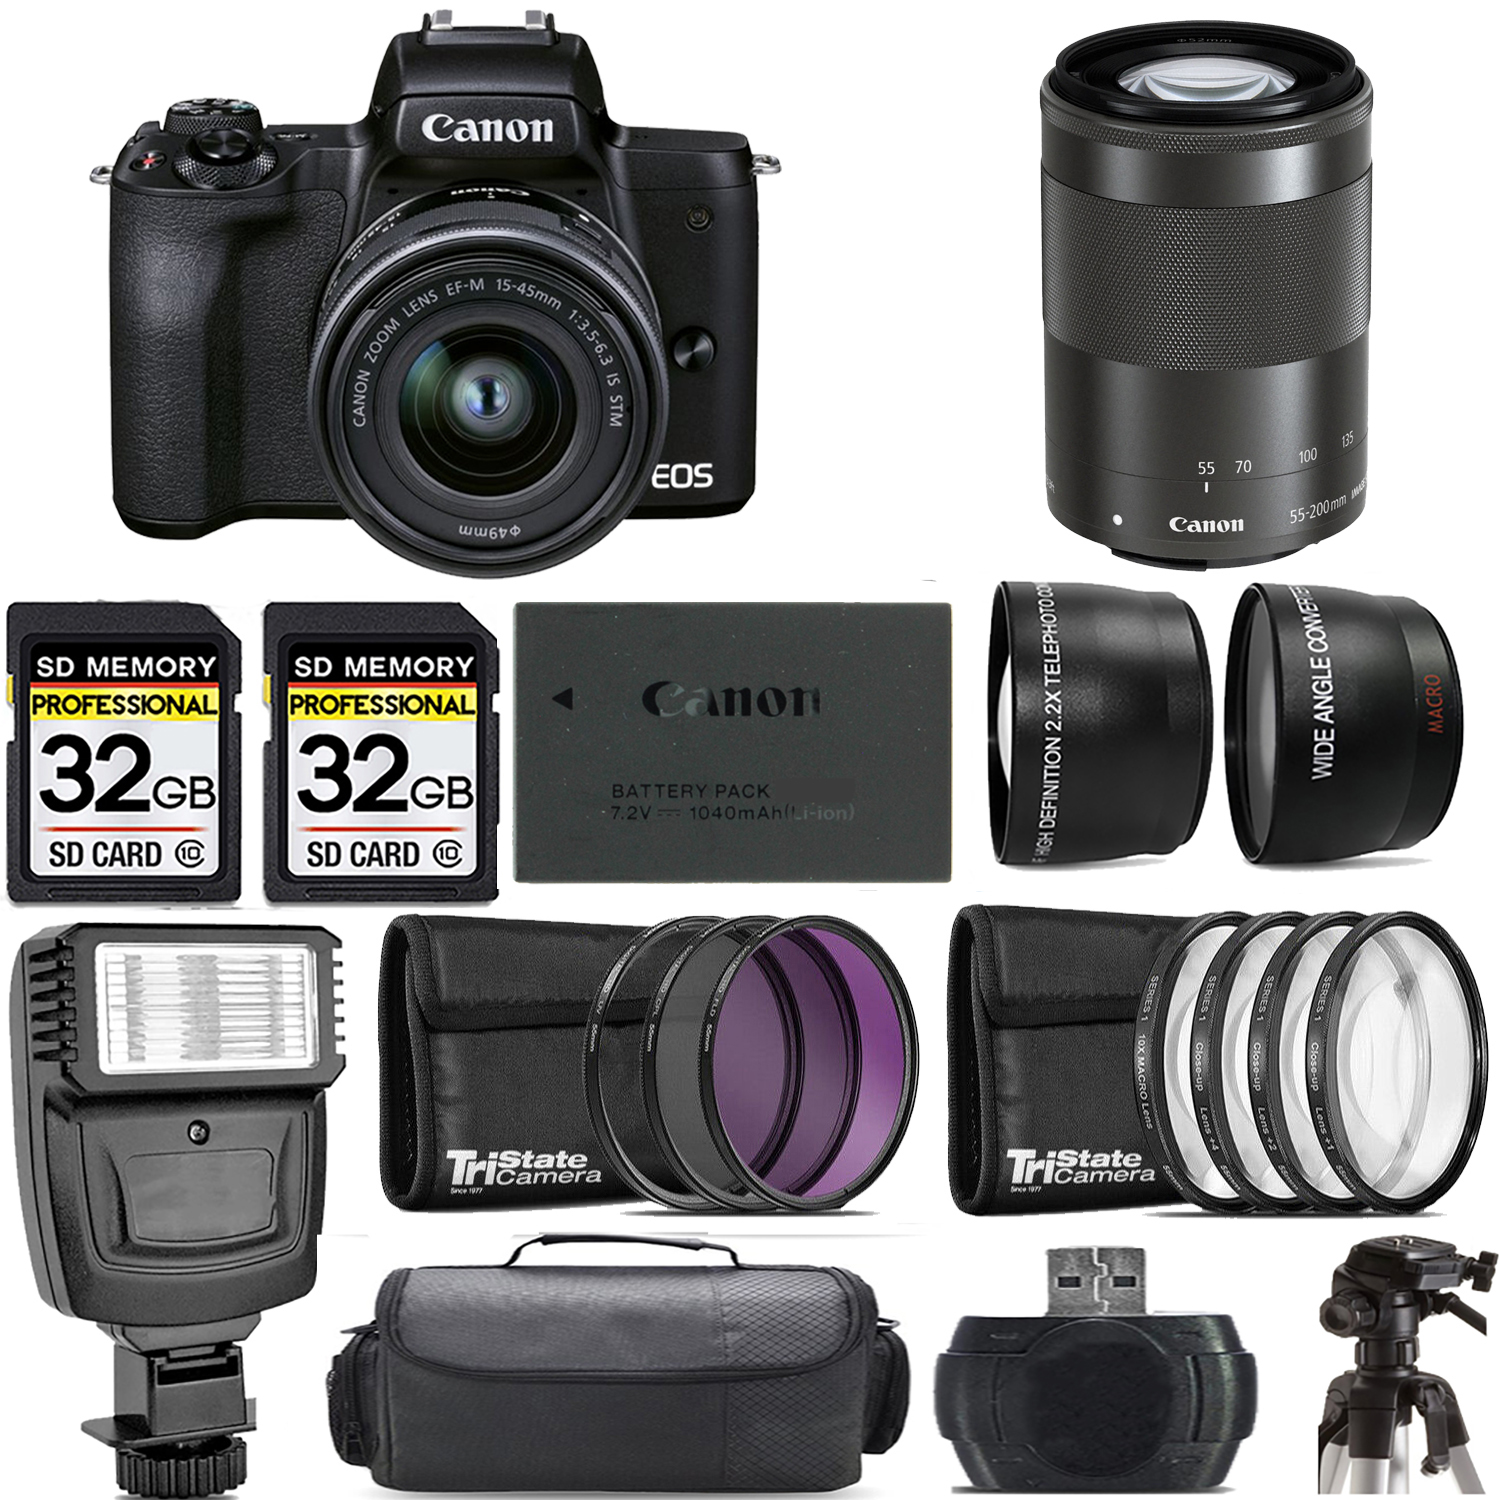 M50 II + 15-45mm Lens (Black) + 55-200mm IS Lens (Black) + Flash - Kit *FREE SHIPPING*